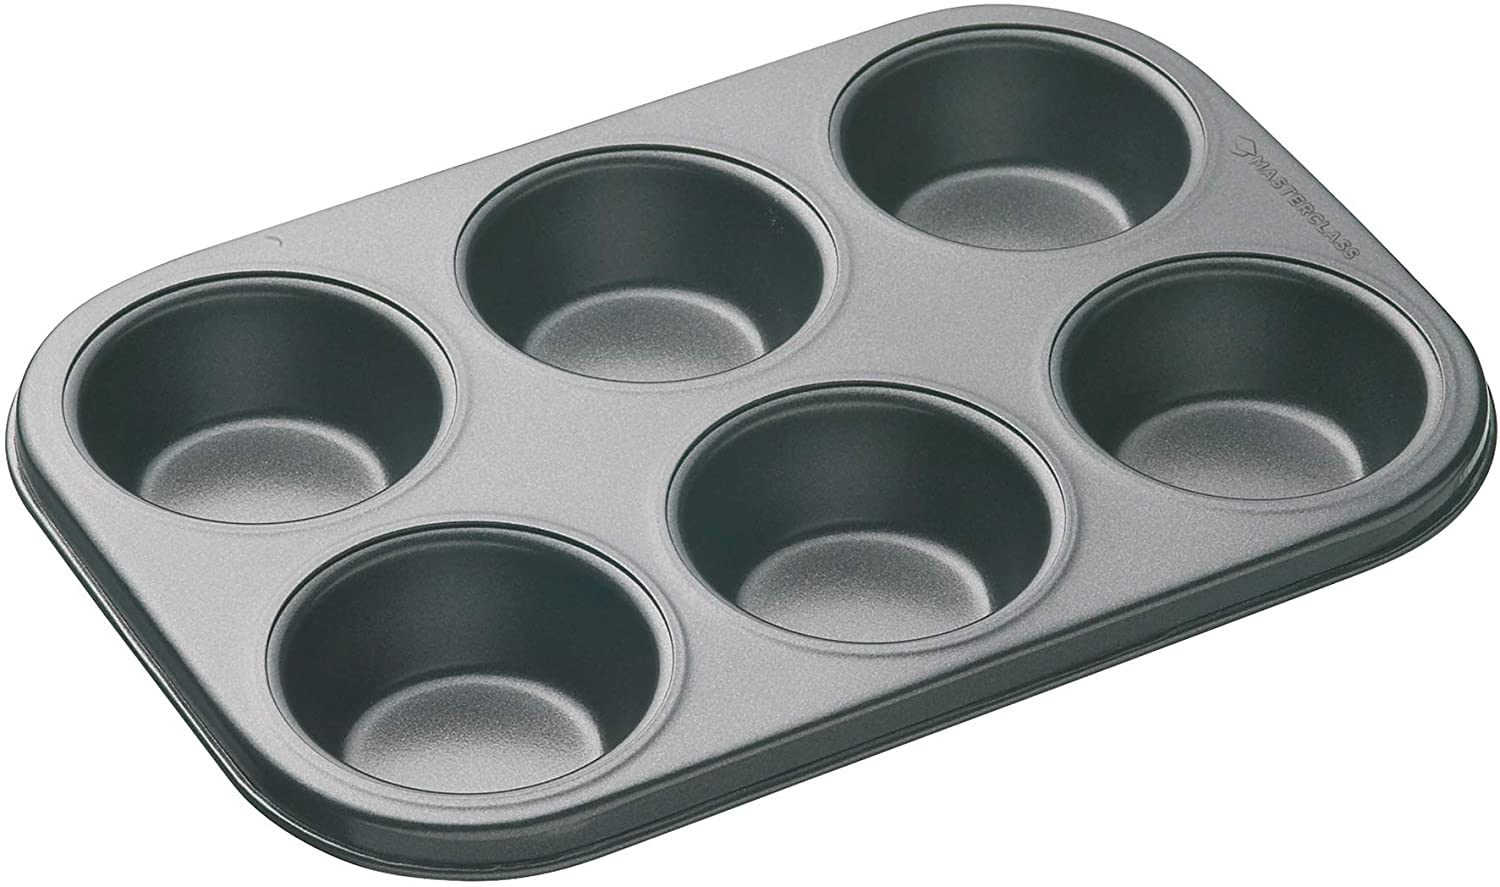 KitchenCraft Master Class Non-Stick 6-Hole Cupcake Tray / Baking Pan, 27 x 18 cm (10.5 x 7 inch)